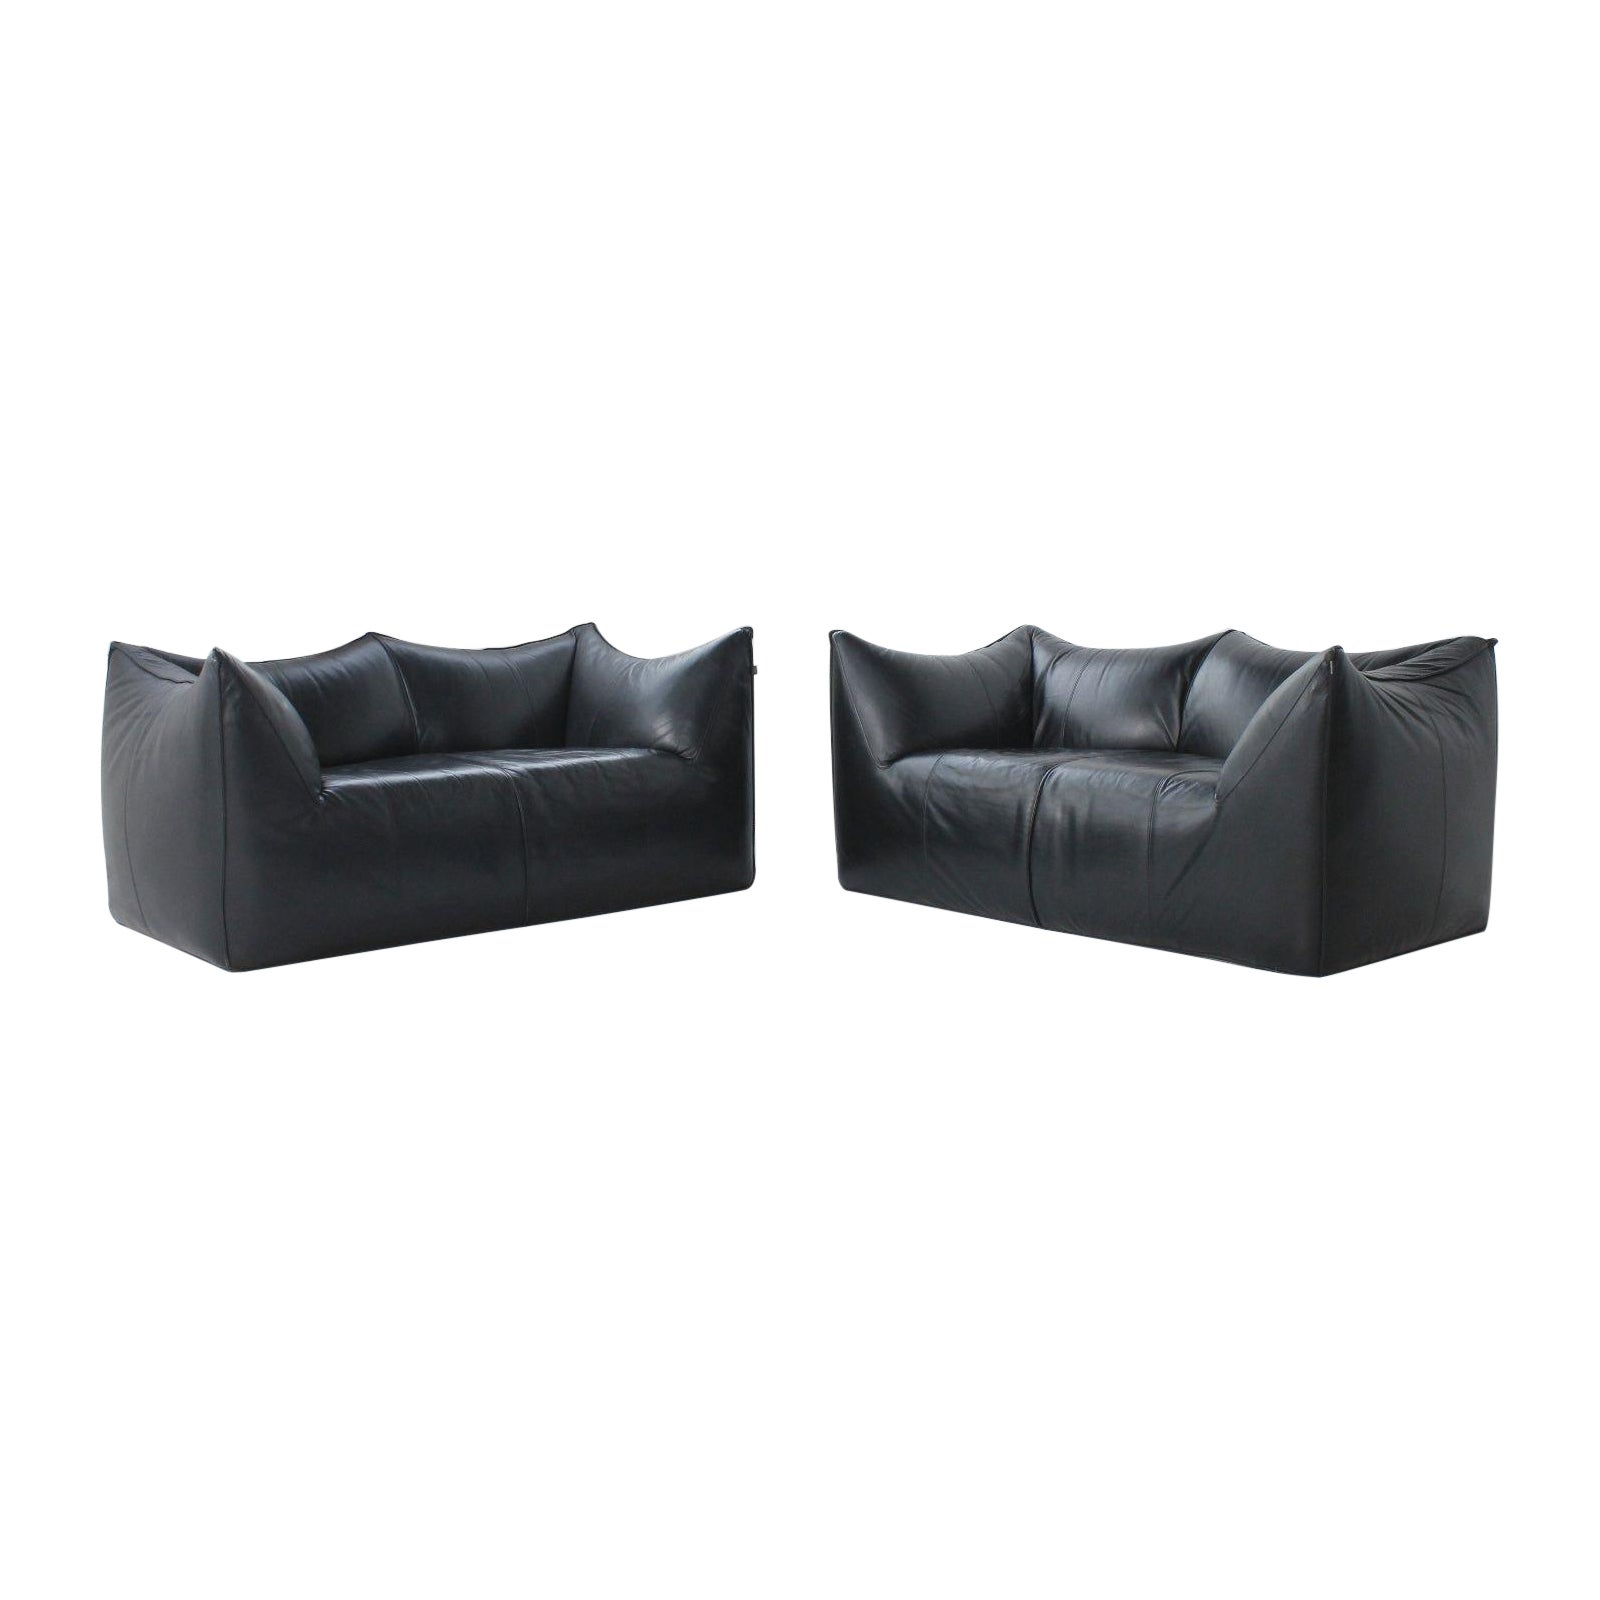 Pair of Le Bambole Sofa by Mario Bellini for B&B Italia black Leather Vintage